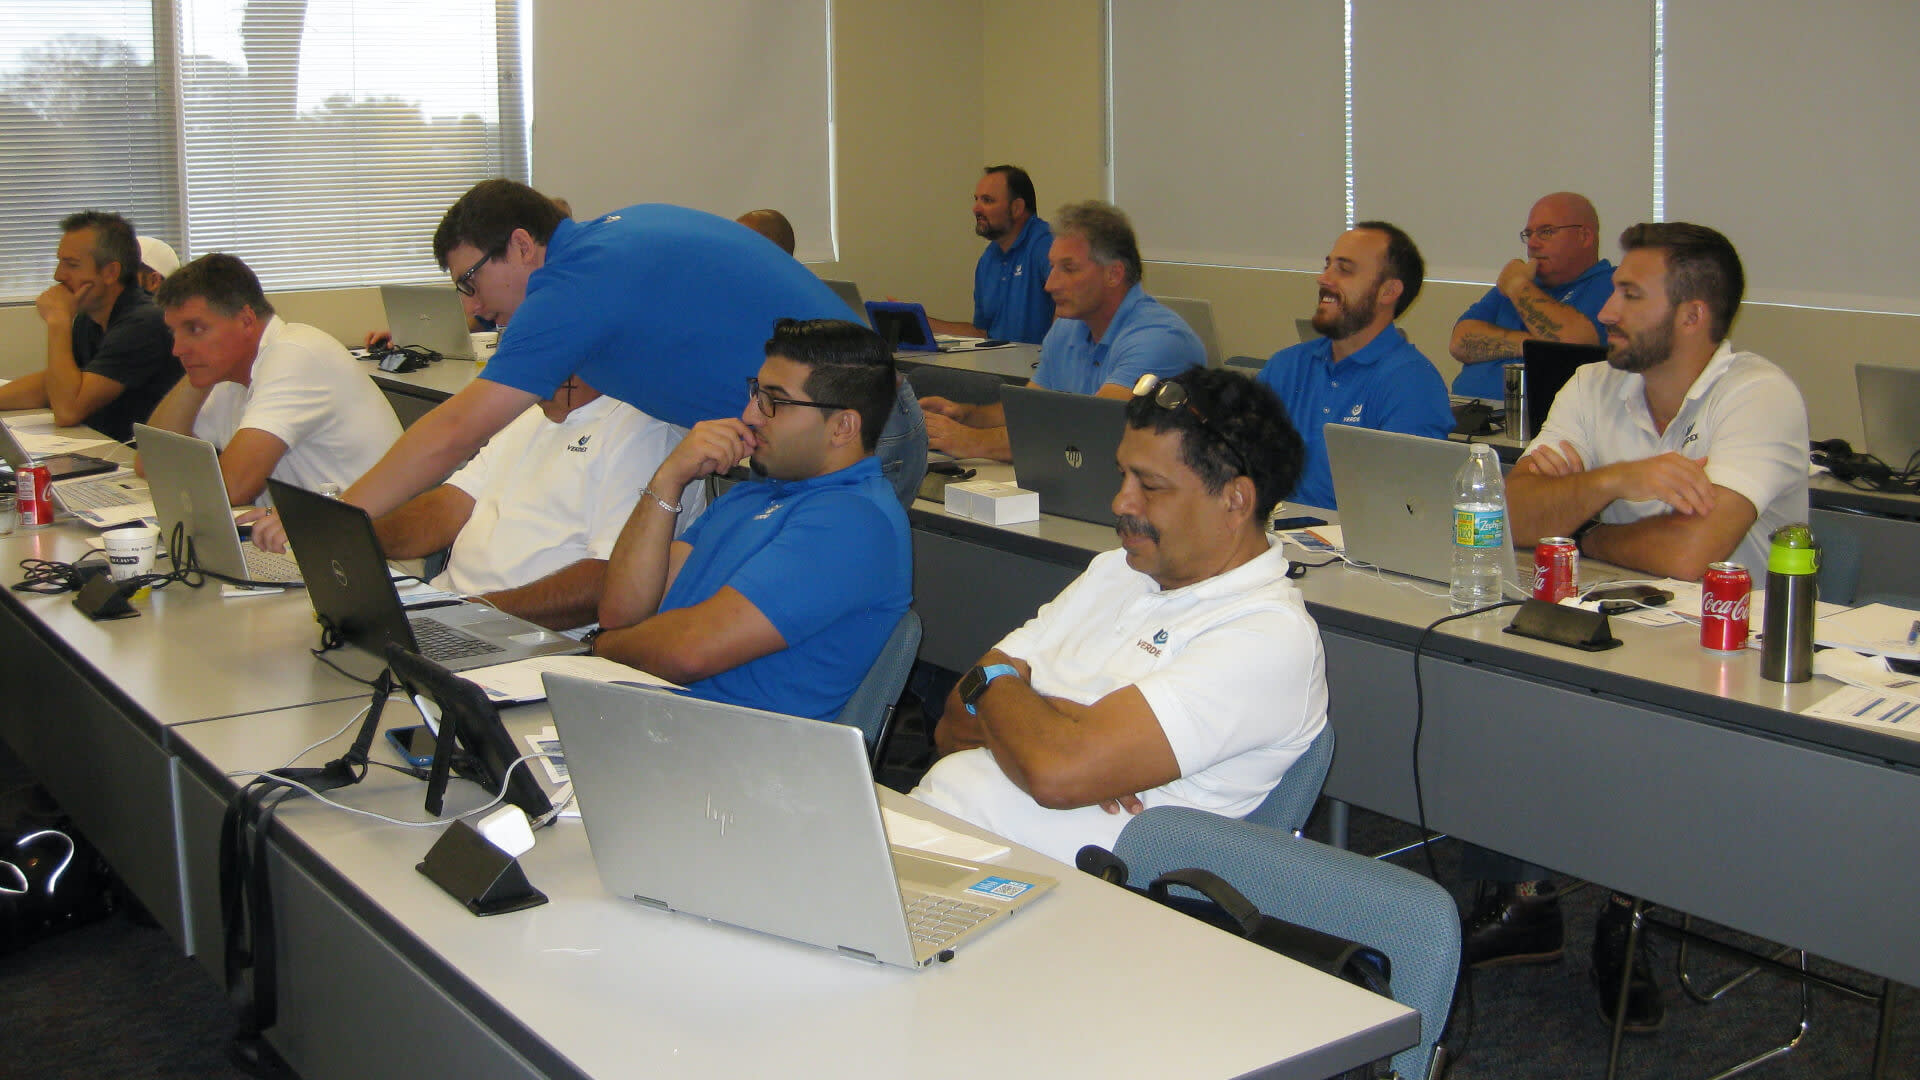 Verdex employees in training